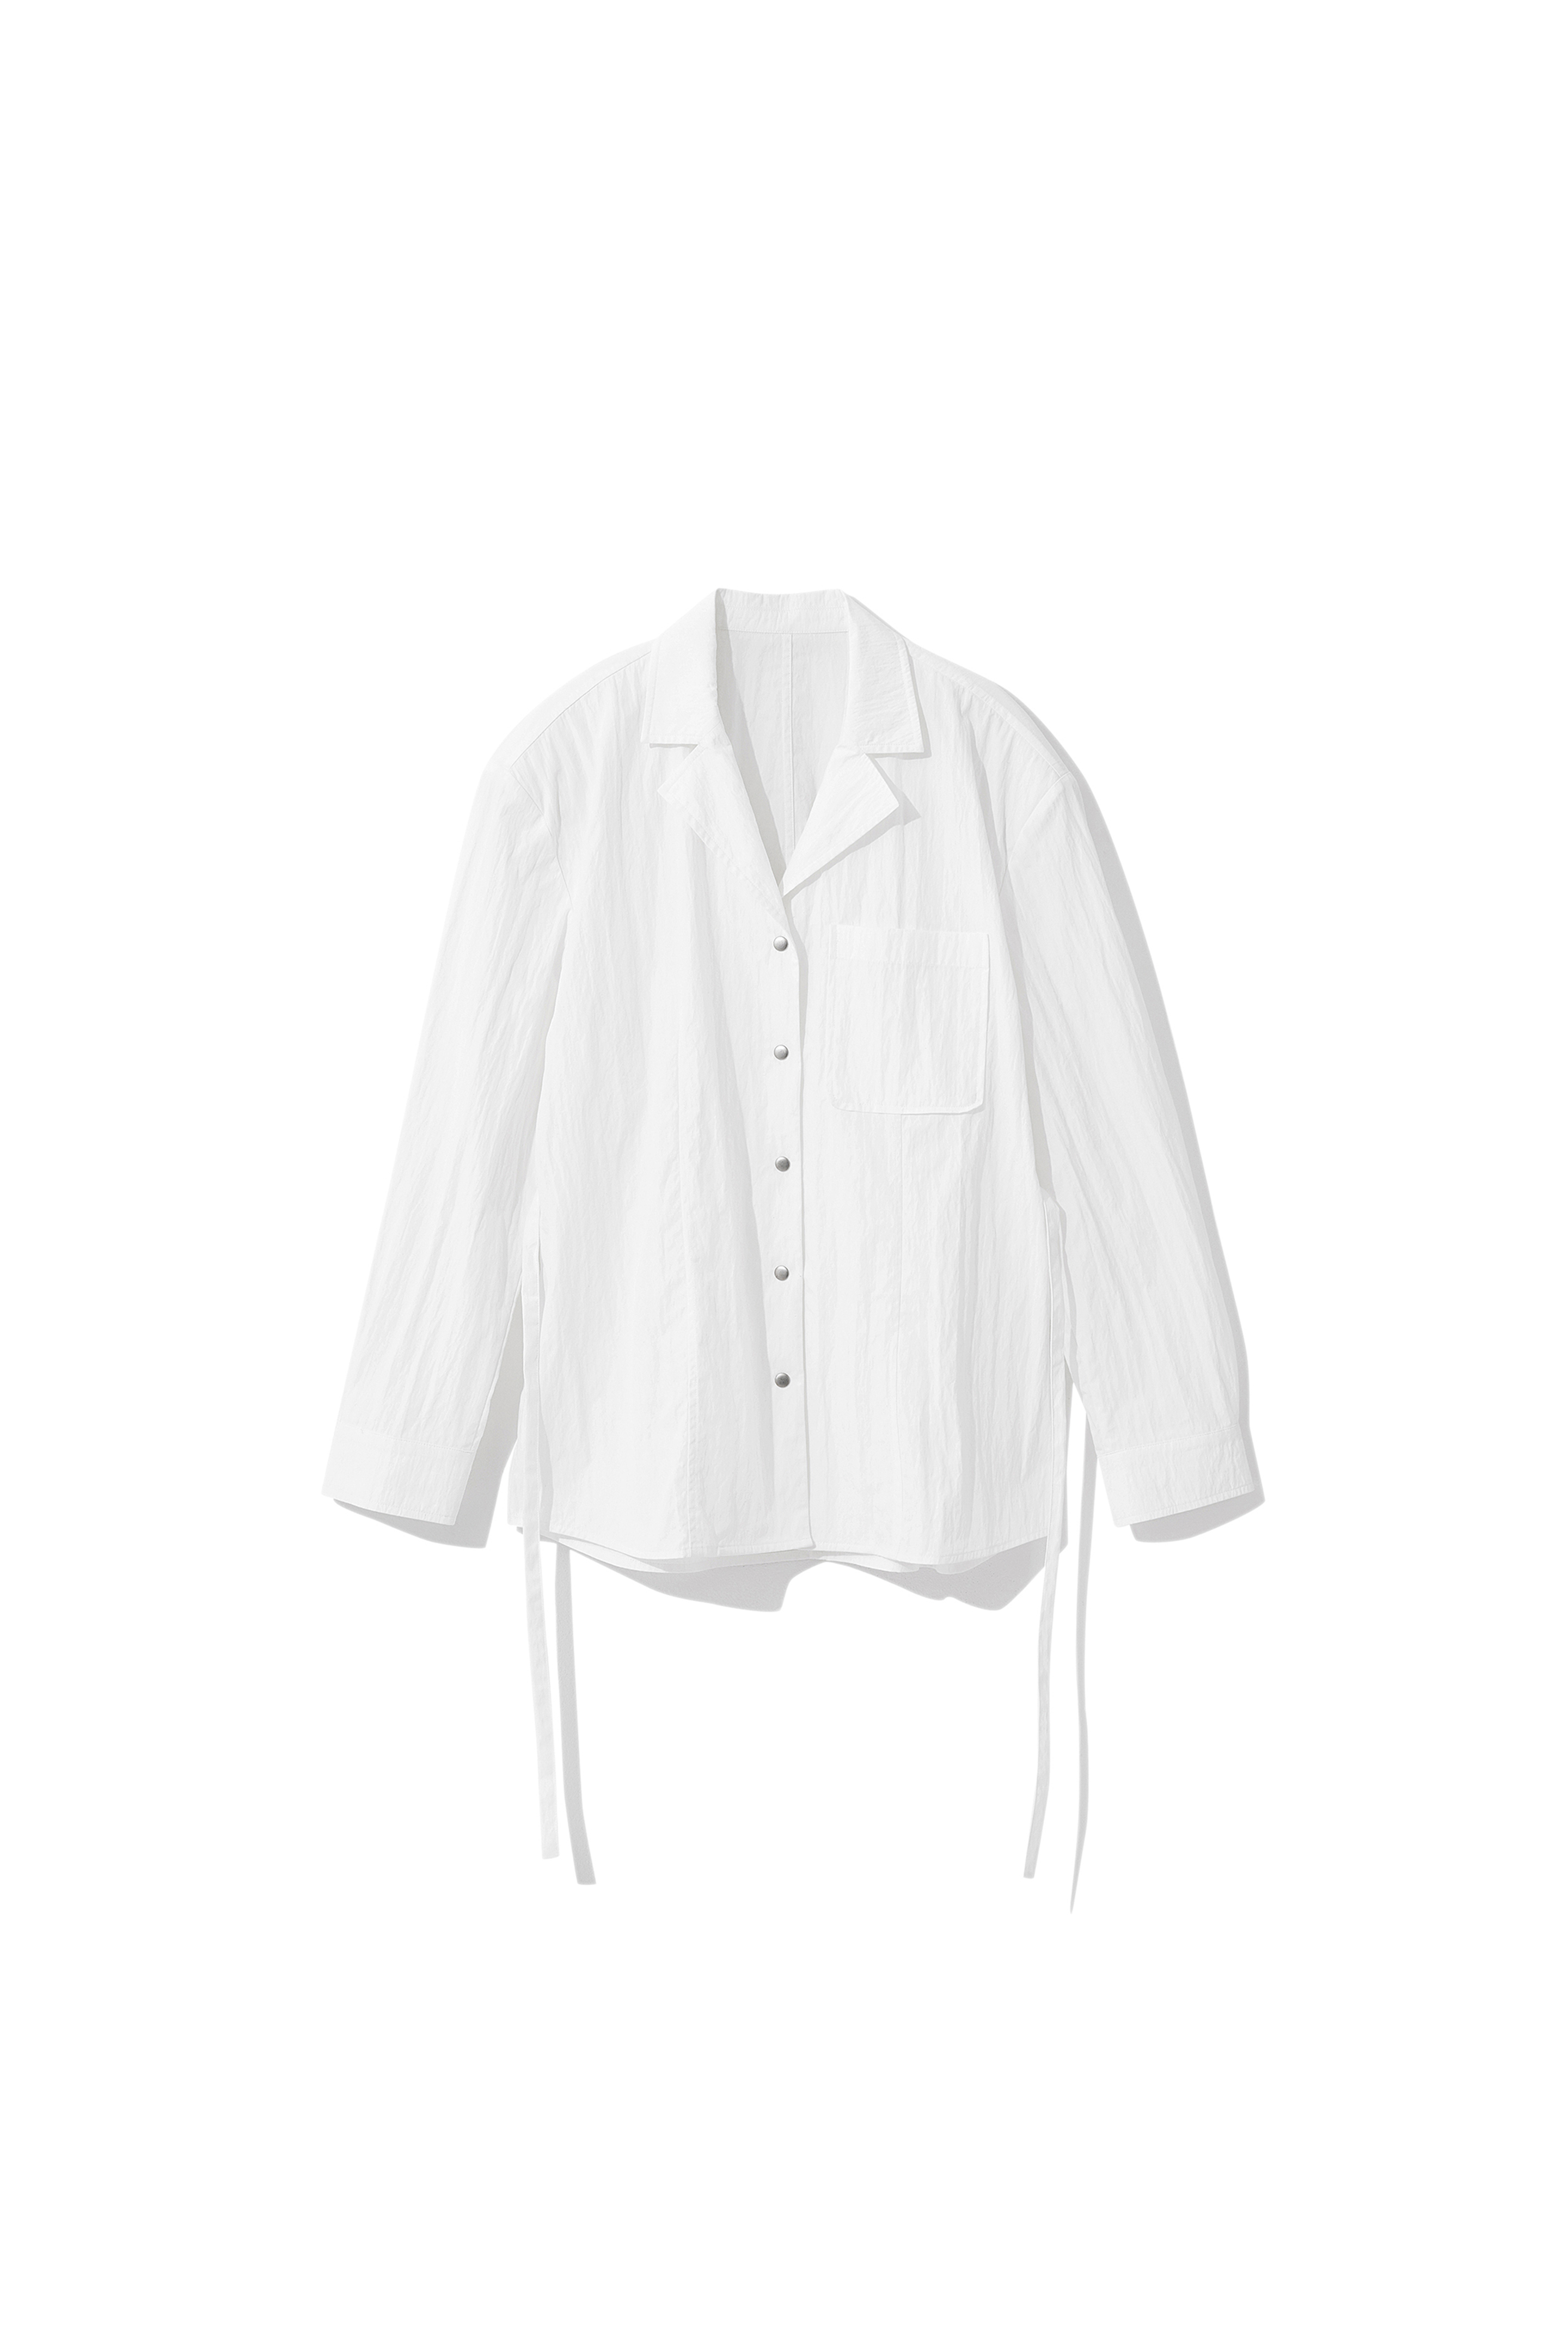 3rd) Kade 2-Way Open-Collar Shirts White [3차 : 09.22(FRI) 예약 발송]